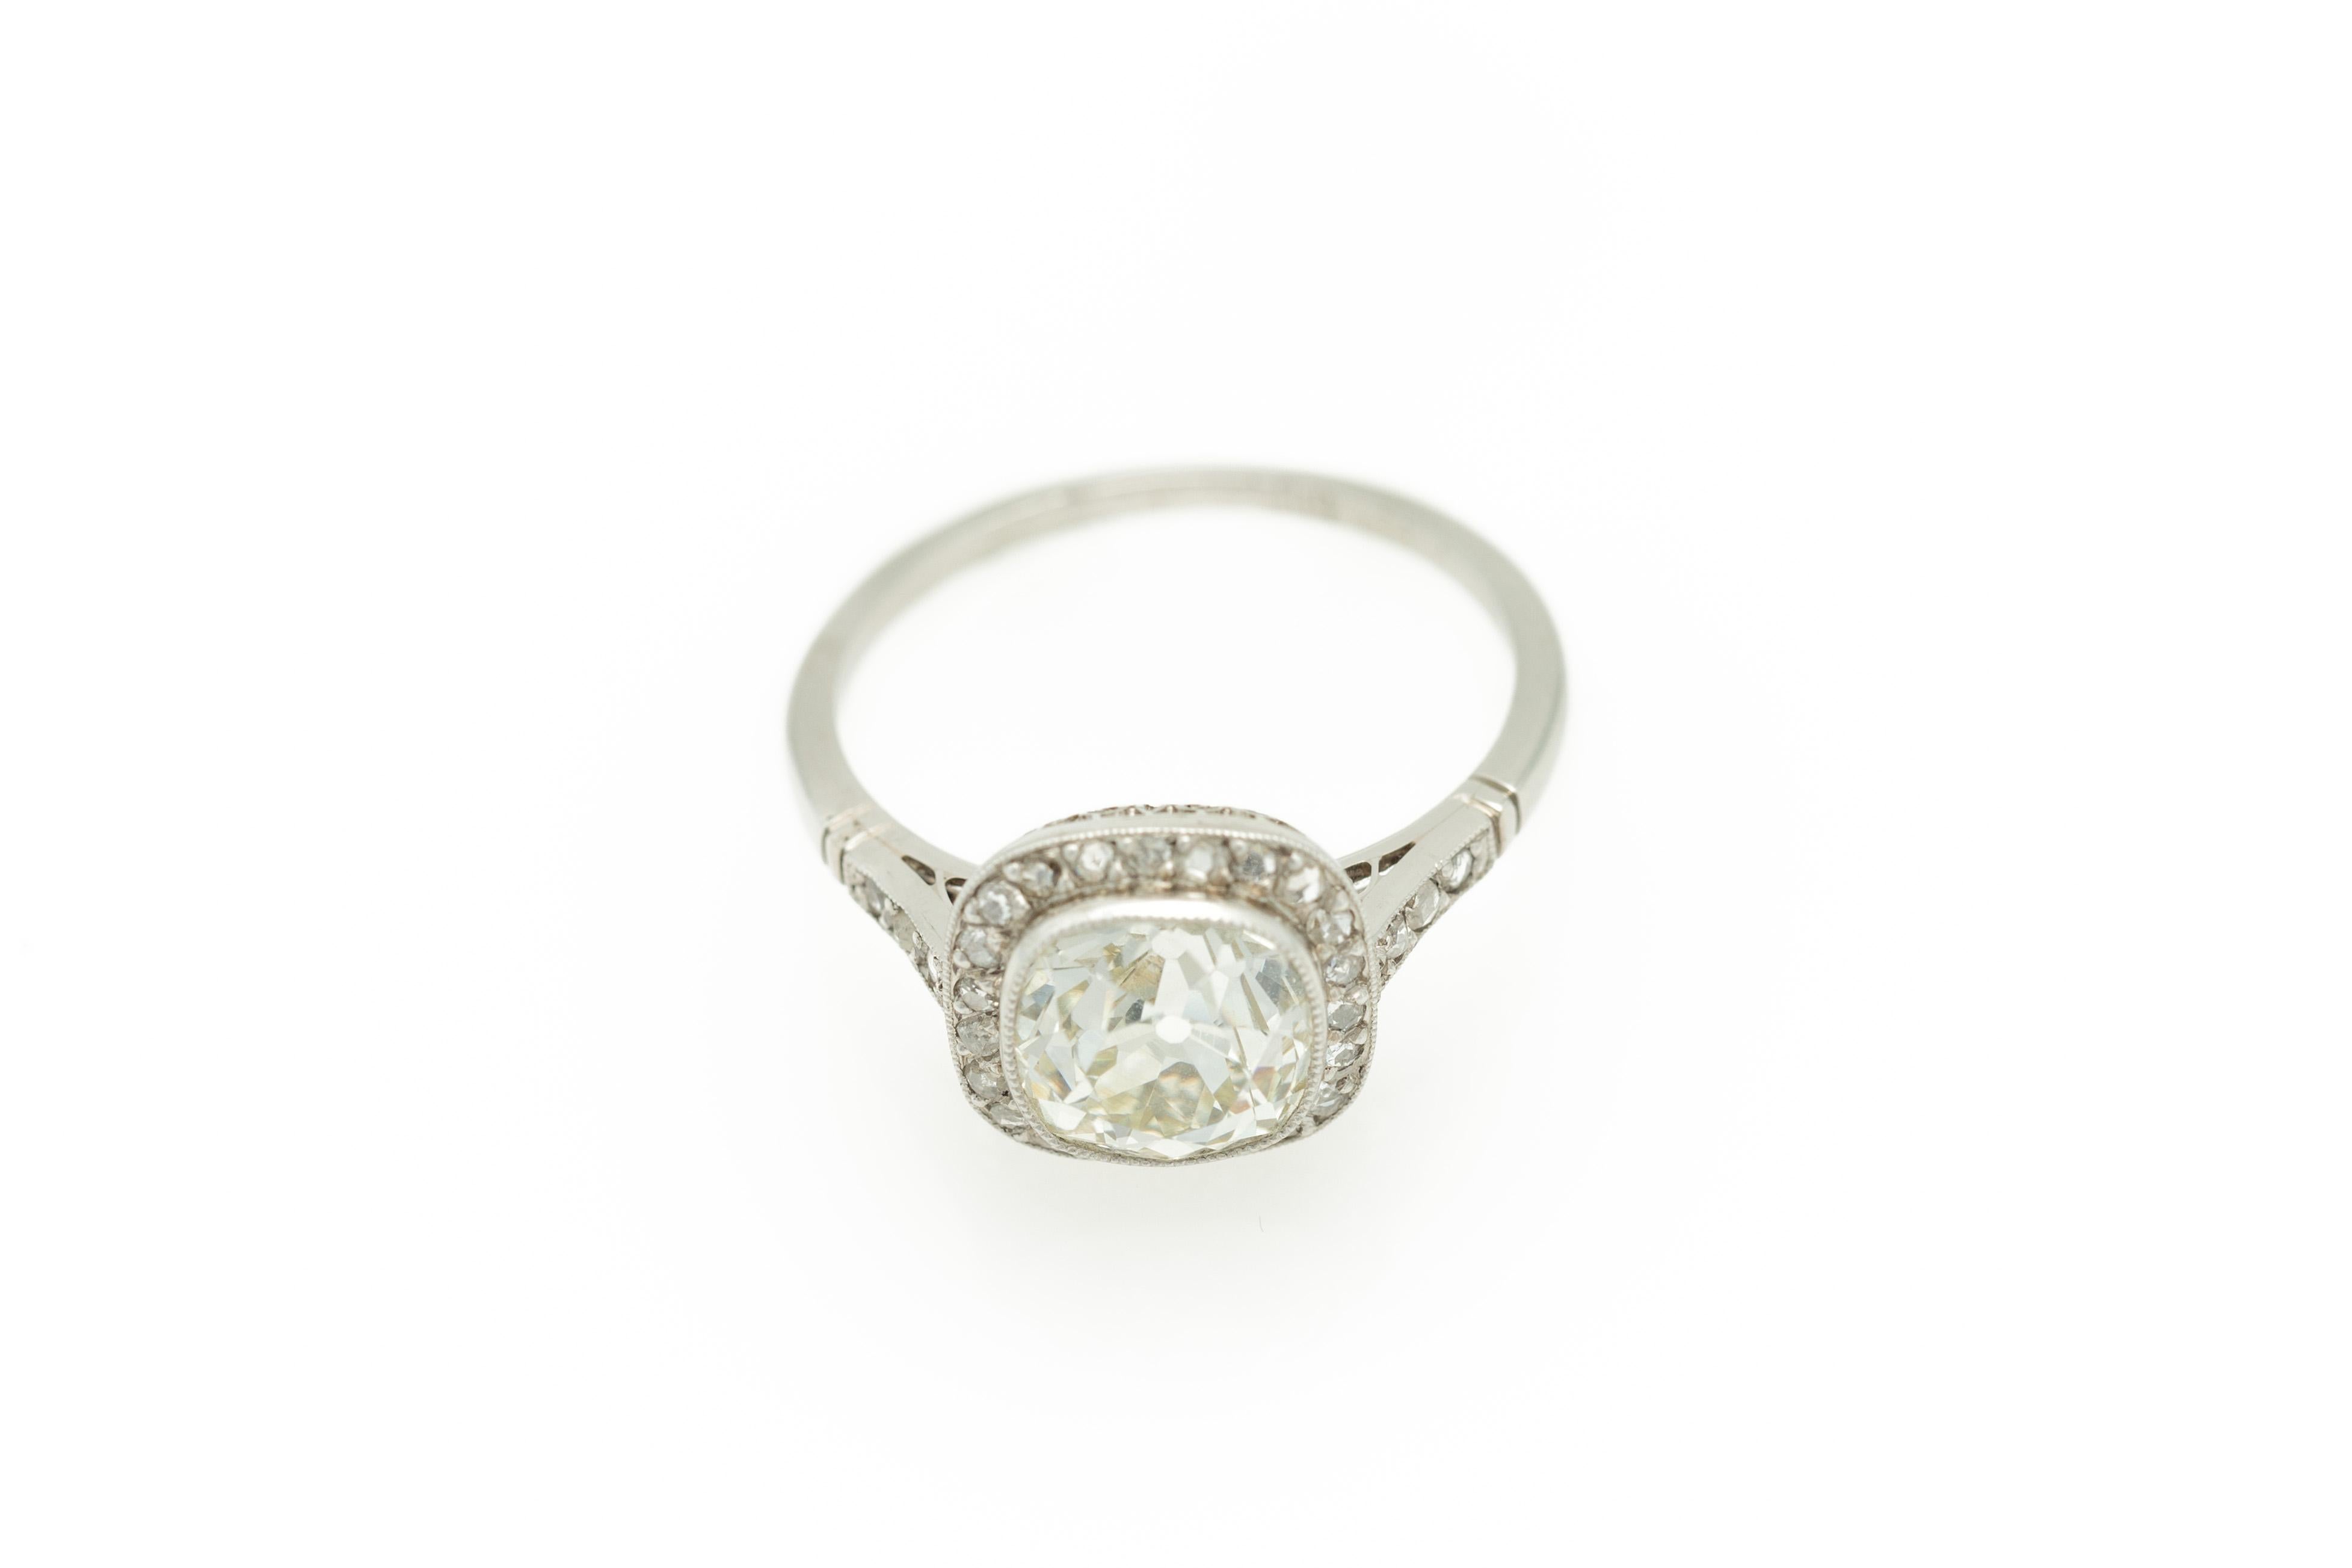 Italian 1950s Art Deco Revival 2.64 Carat Cushion Cut Diamond Ring in Platinum 7